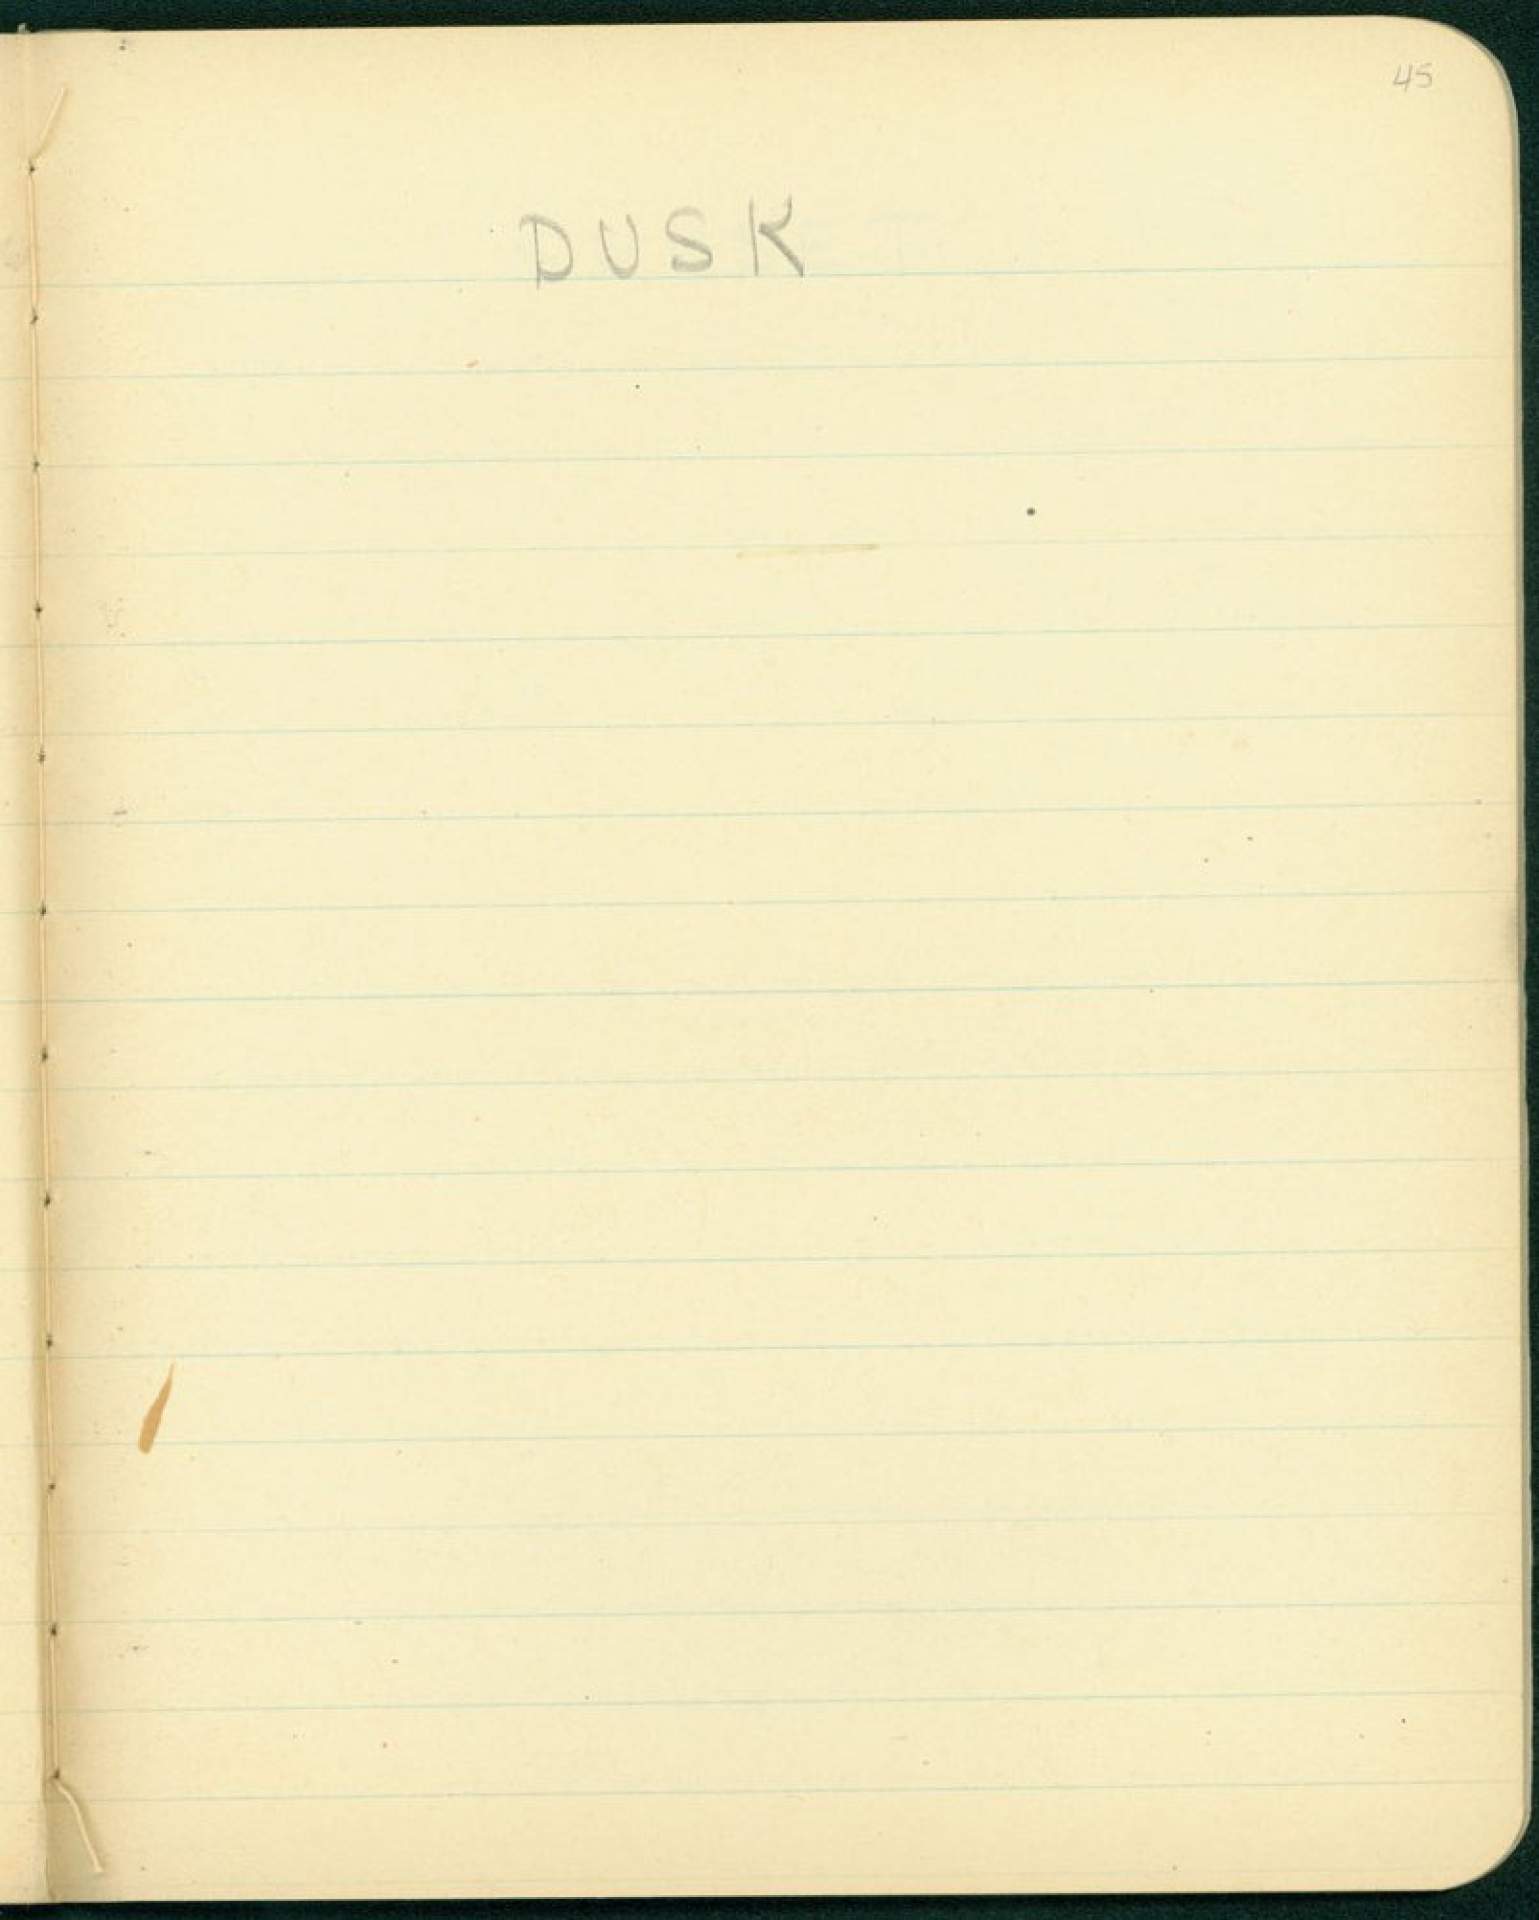 "Dusk" in Idea Book, Vol. 1